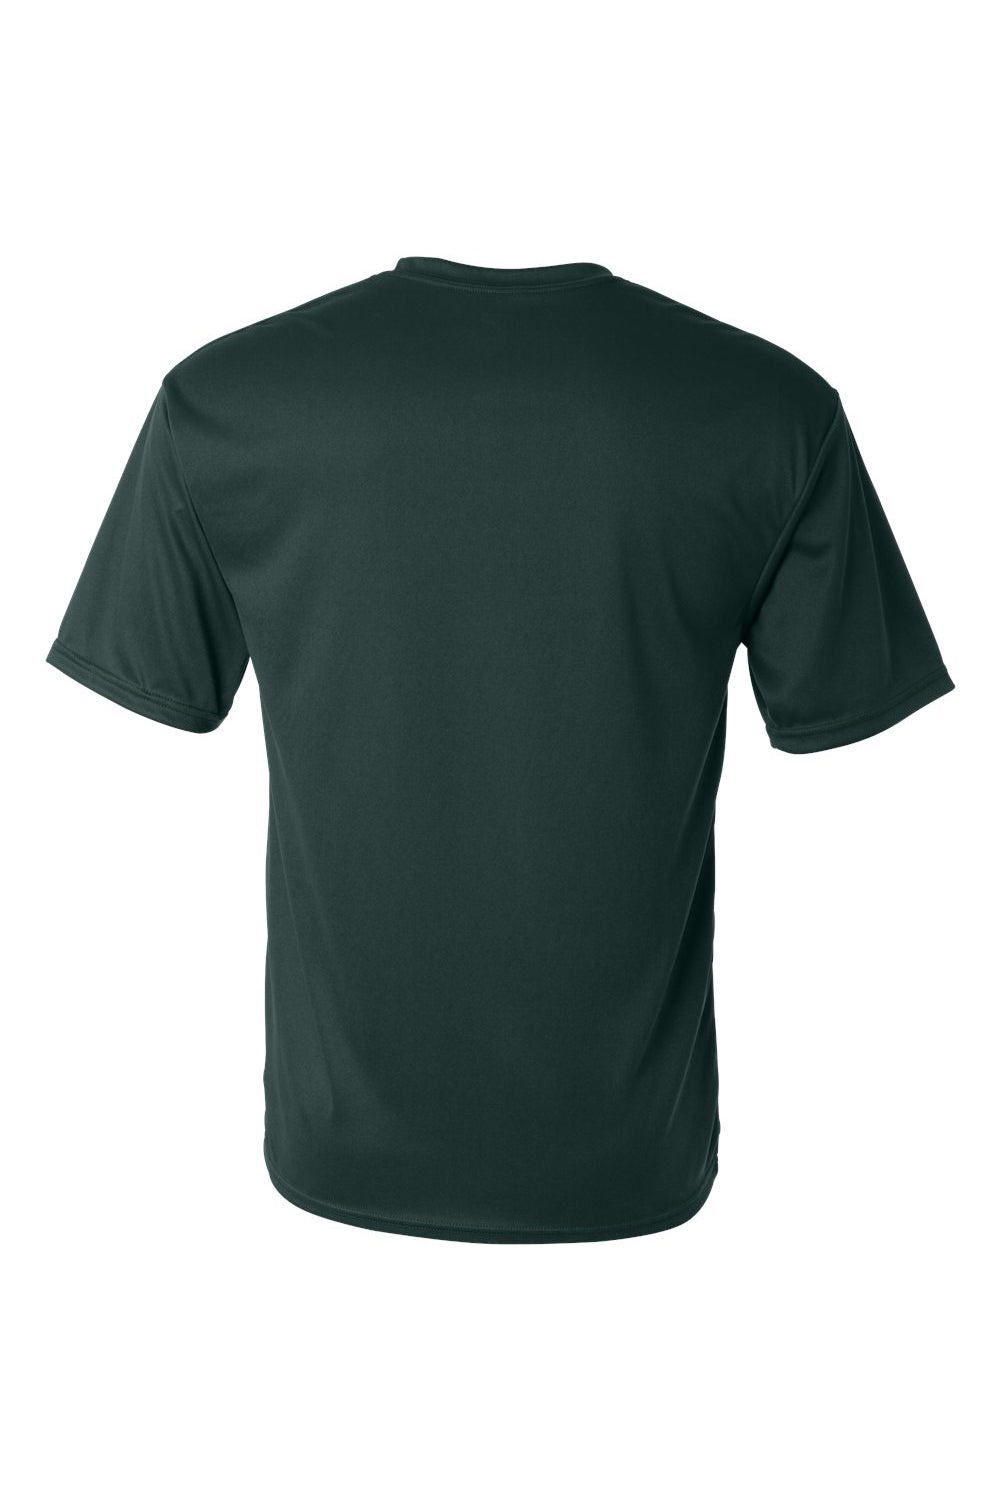 C2 Sport 5100 Mens Performance Moisture Wicking Short Sleeve Crewneck T-Shirt Forest Green Flat Back